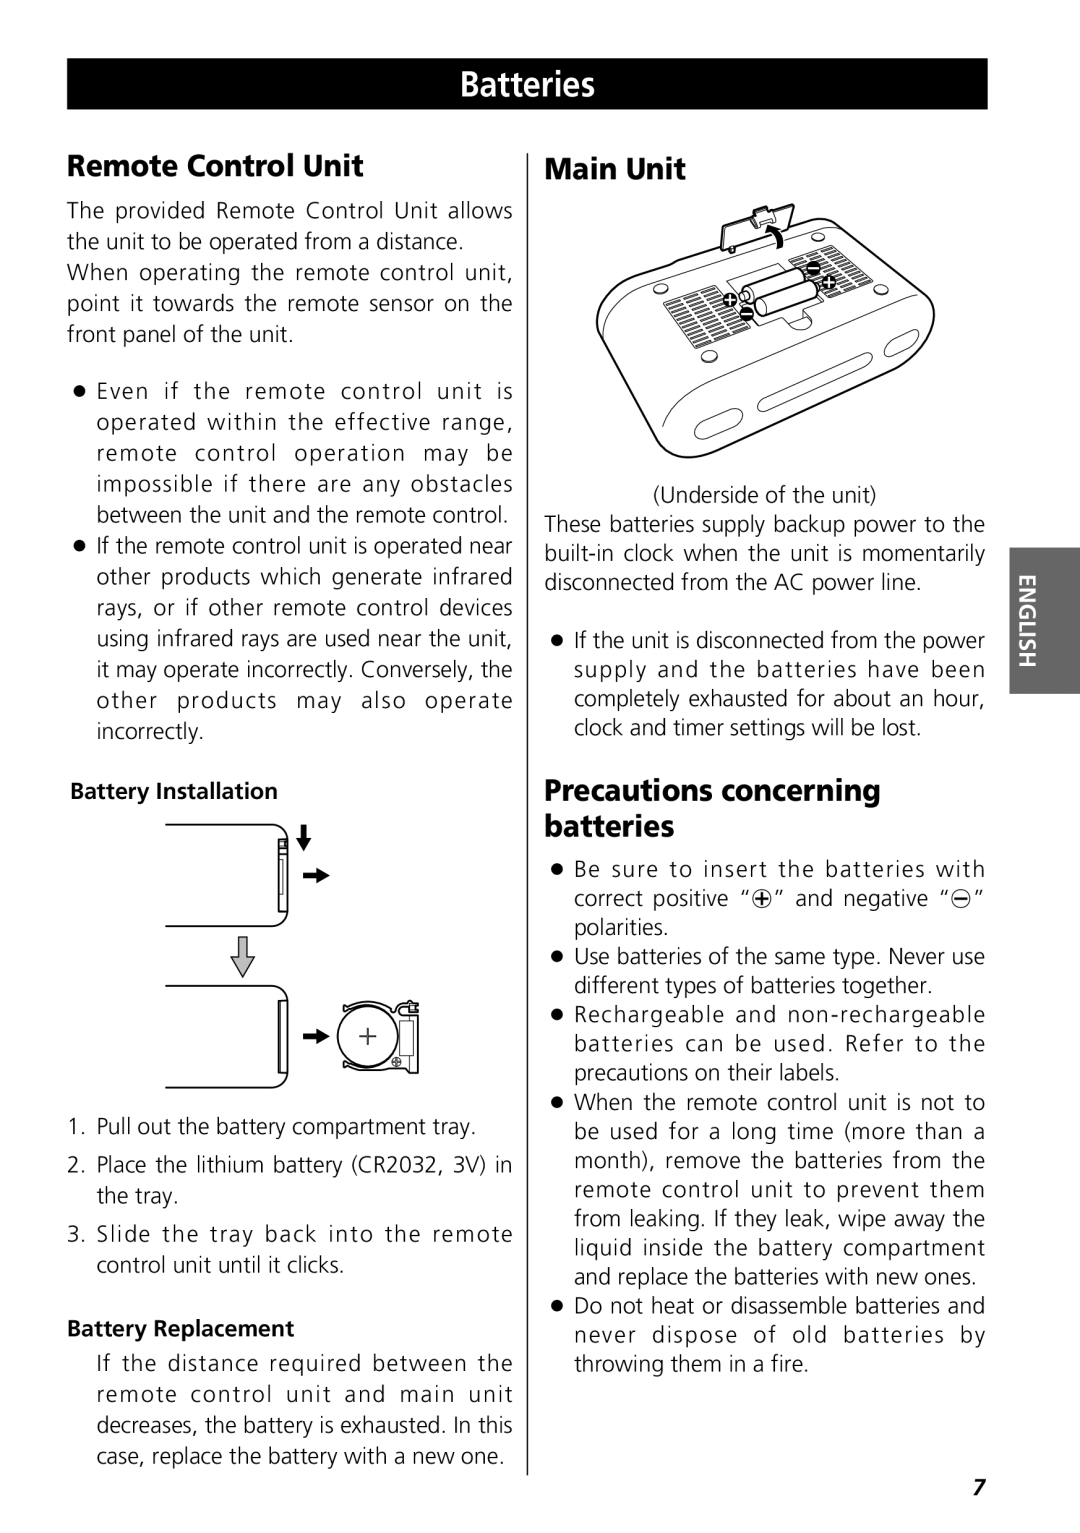 Teac GR-7i owner manual Batteries, Remote Control Unit, Main Unit, Precautions concerning batteries 